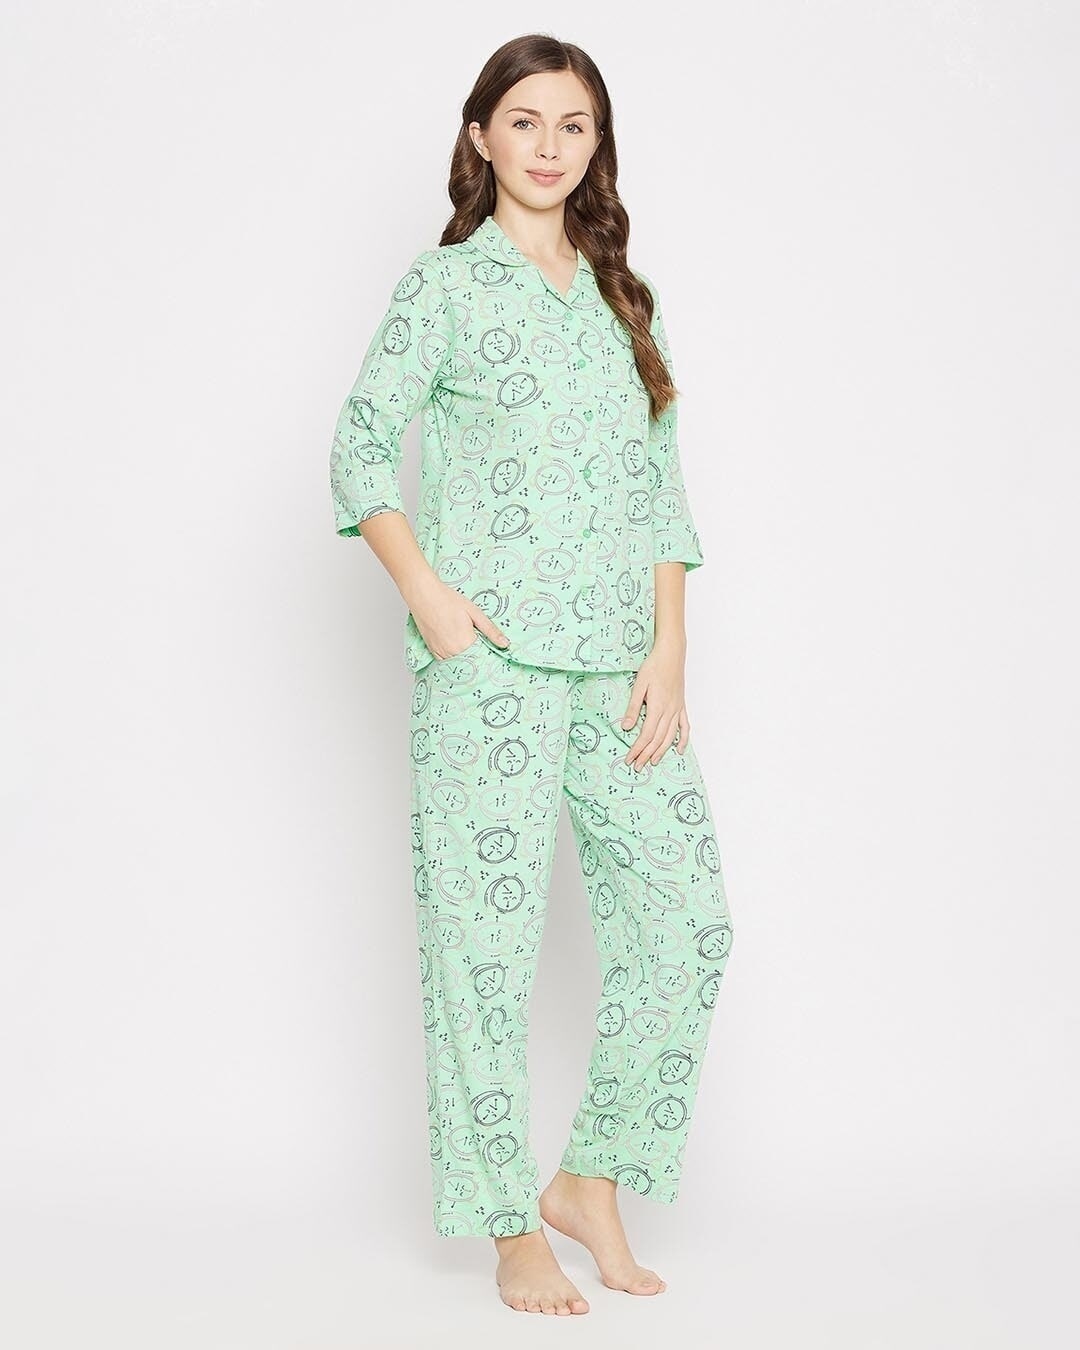 Shop Women's Green Printed Top & Pyjama Set (Pack of 2)-Design